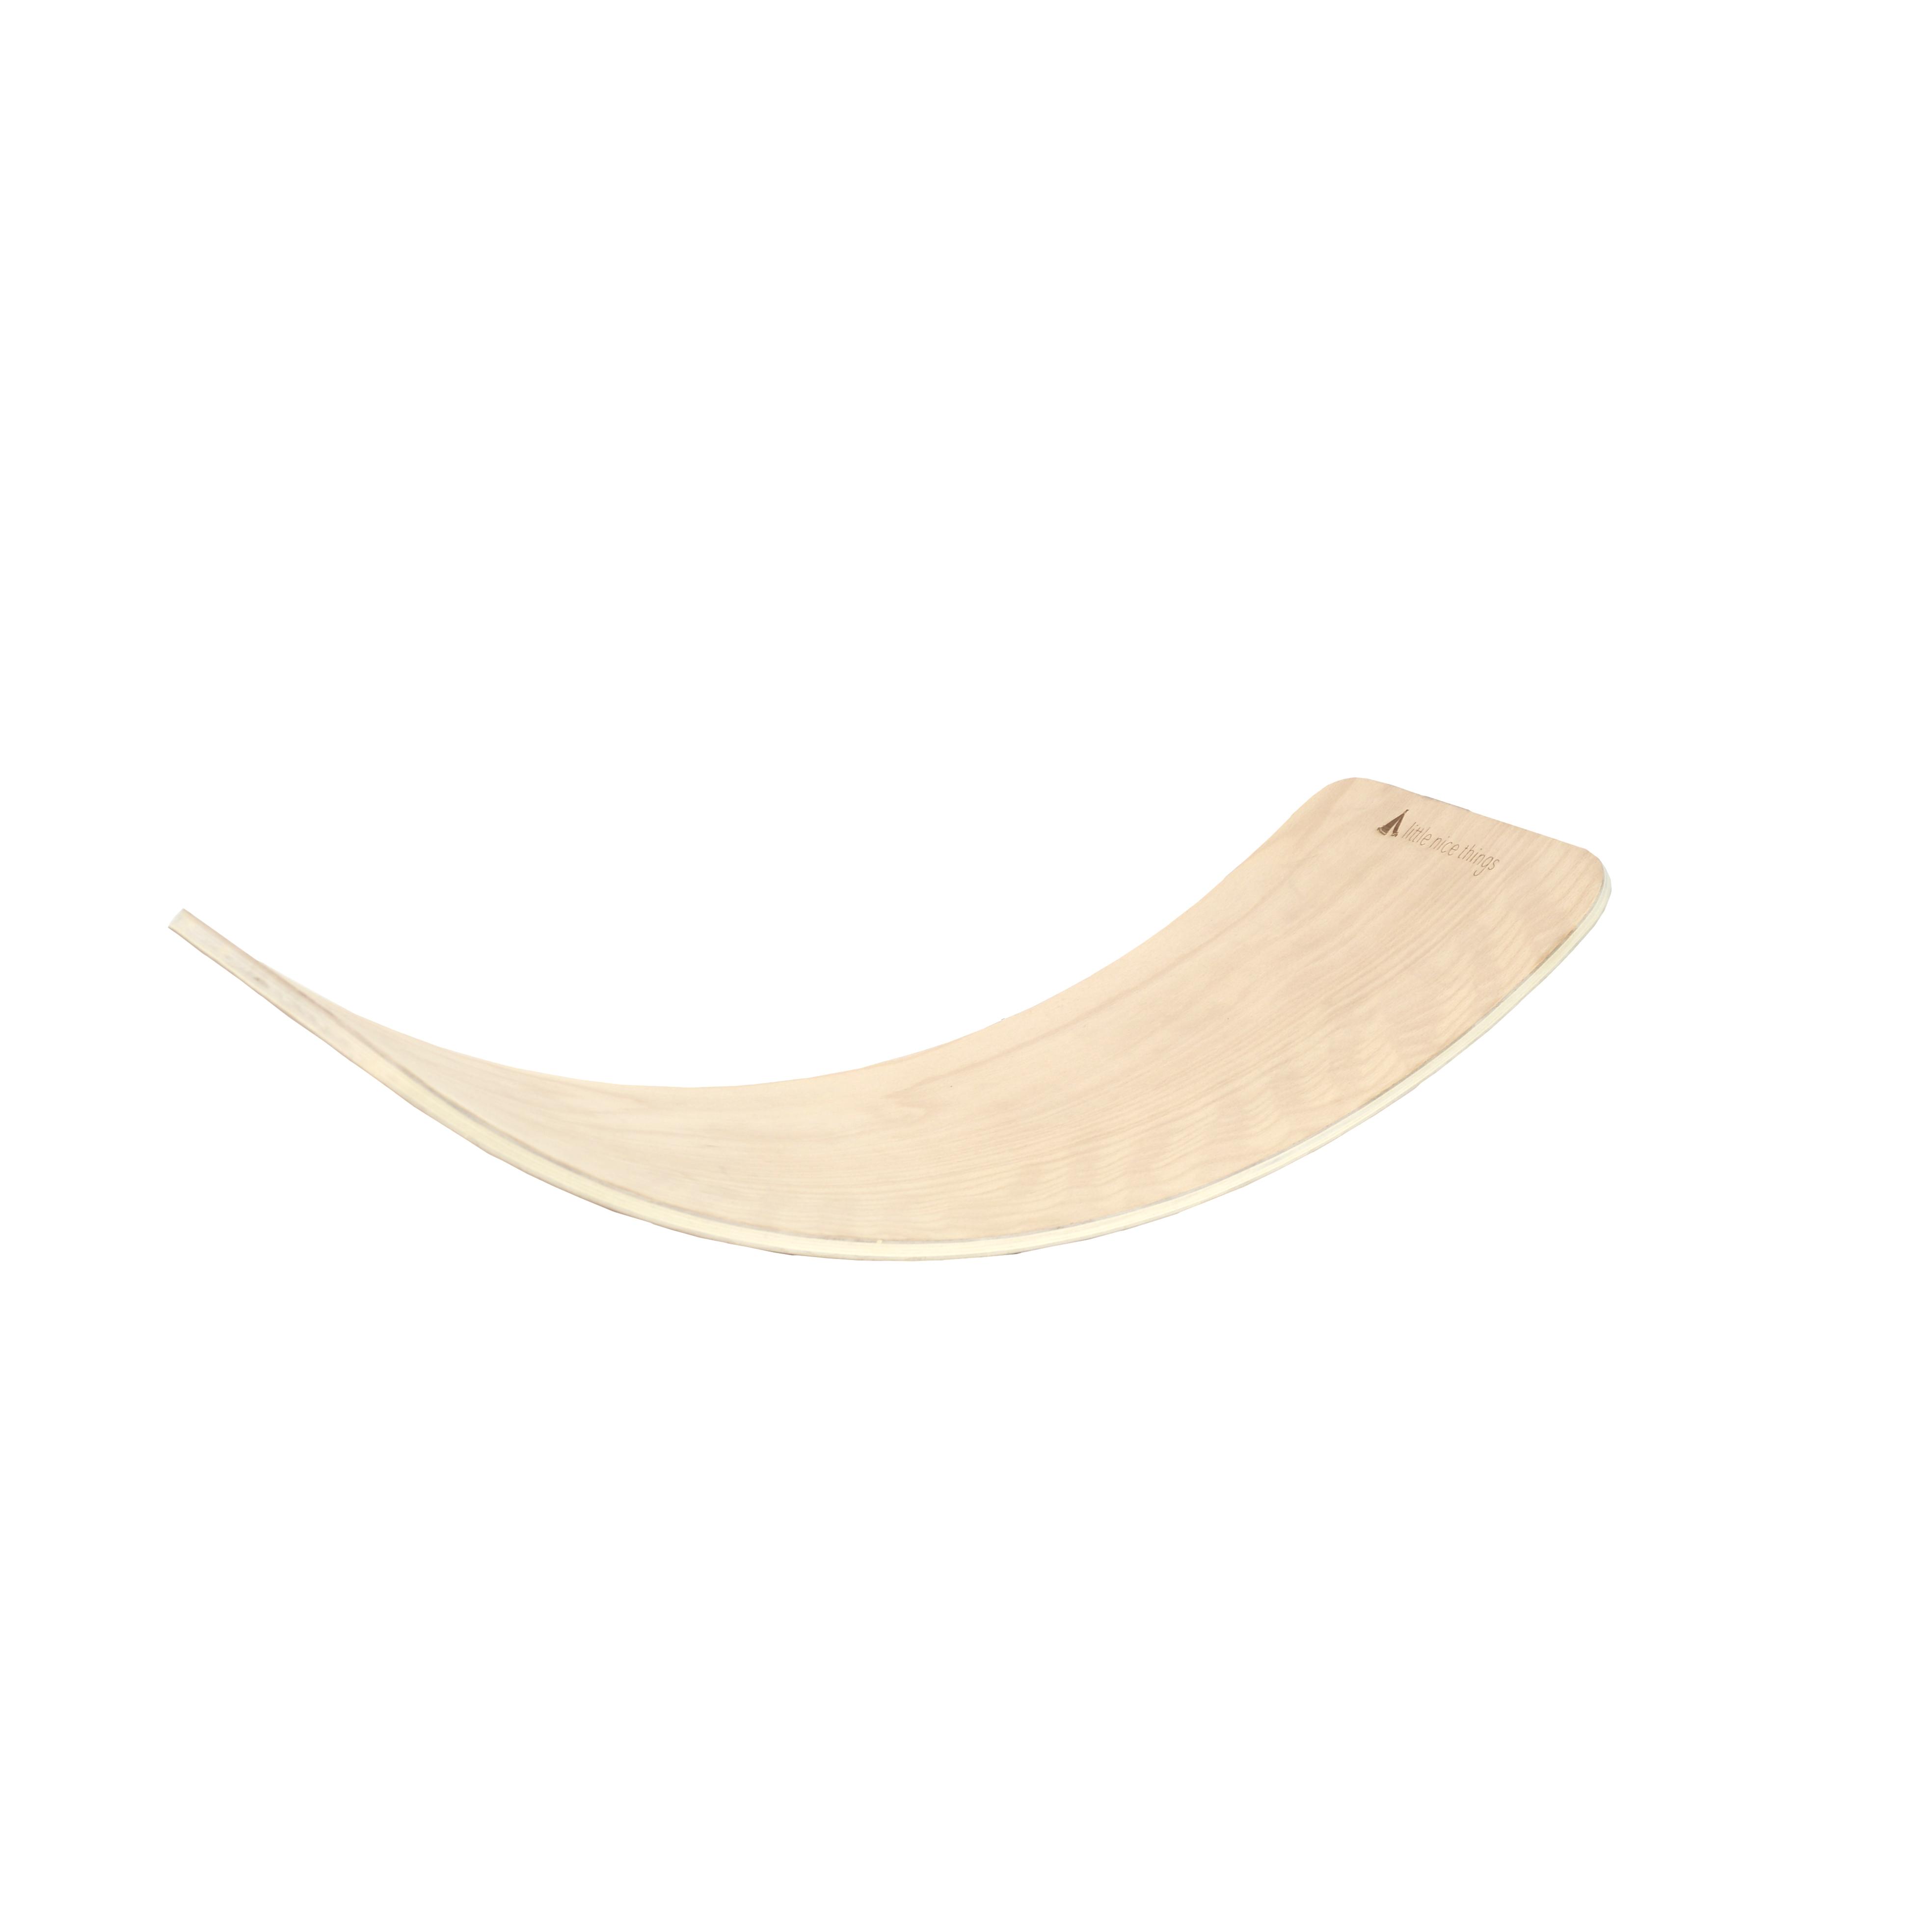 Tradineur - Silla infantil de madera natural, respaldo de pico